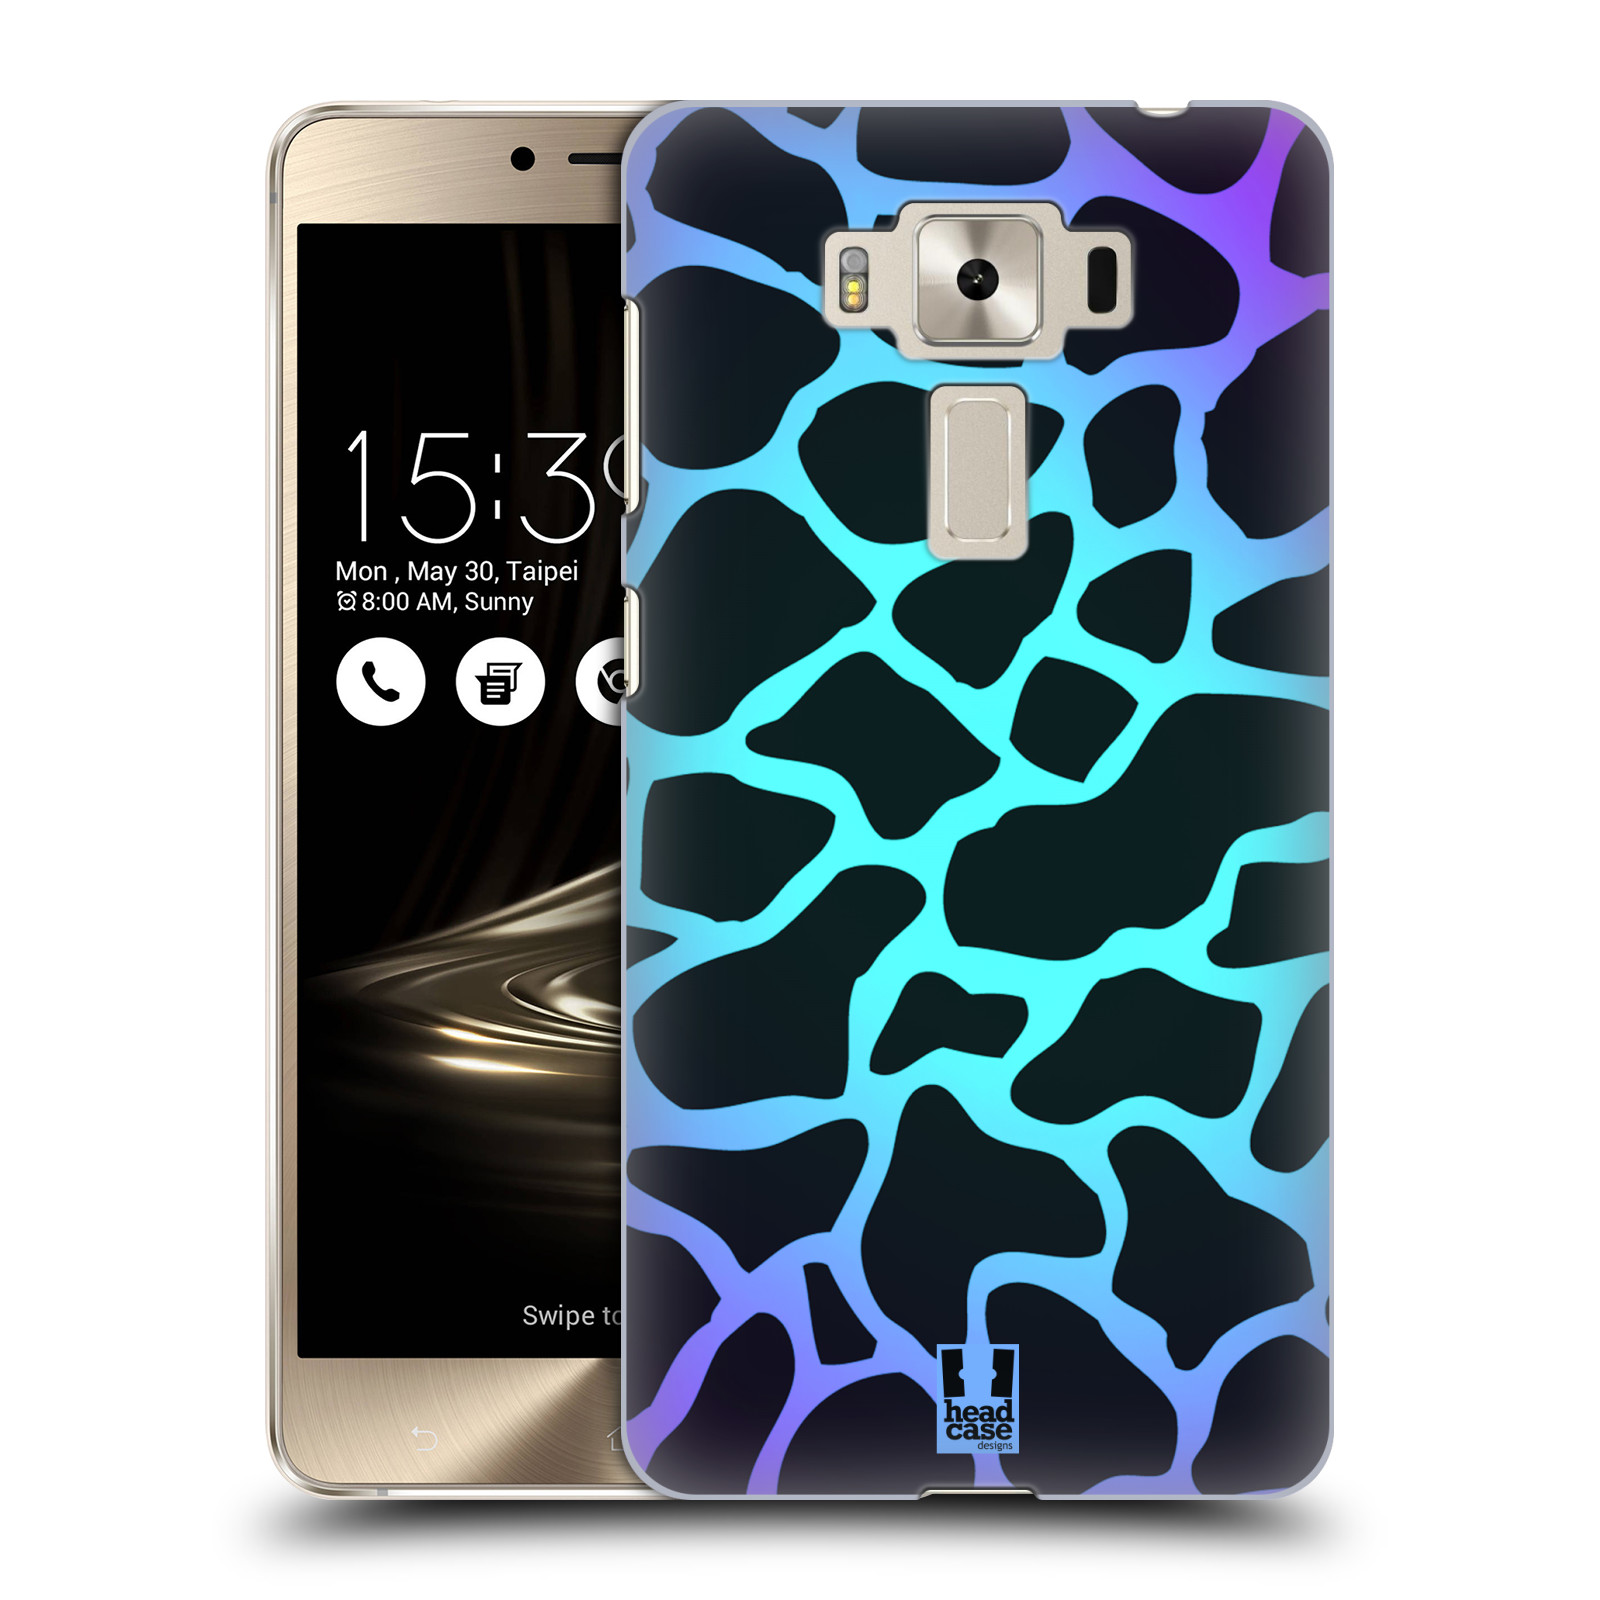 HEAD CASE plastový obal na mobil Asus Zenfone 3 DELUXE ZS550KL vzor Divočina zvíře tyrkysová žirafa magický vzor